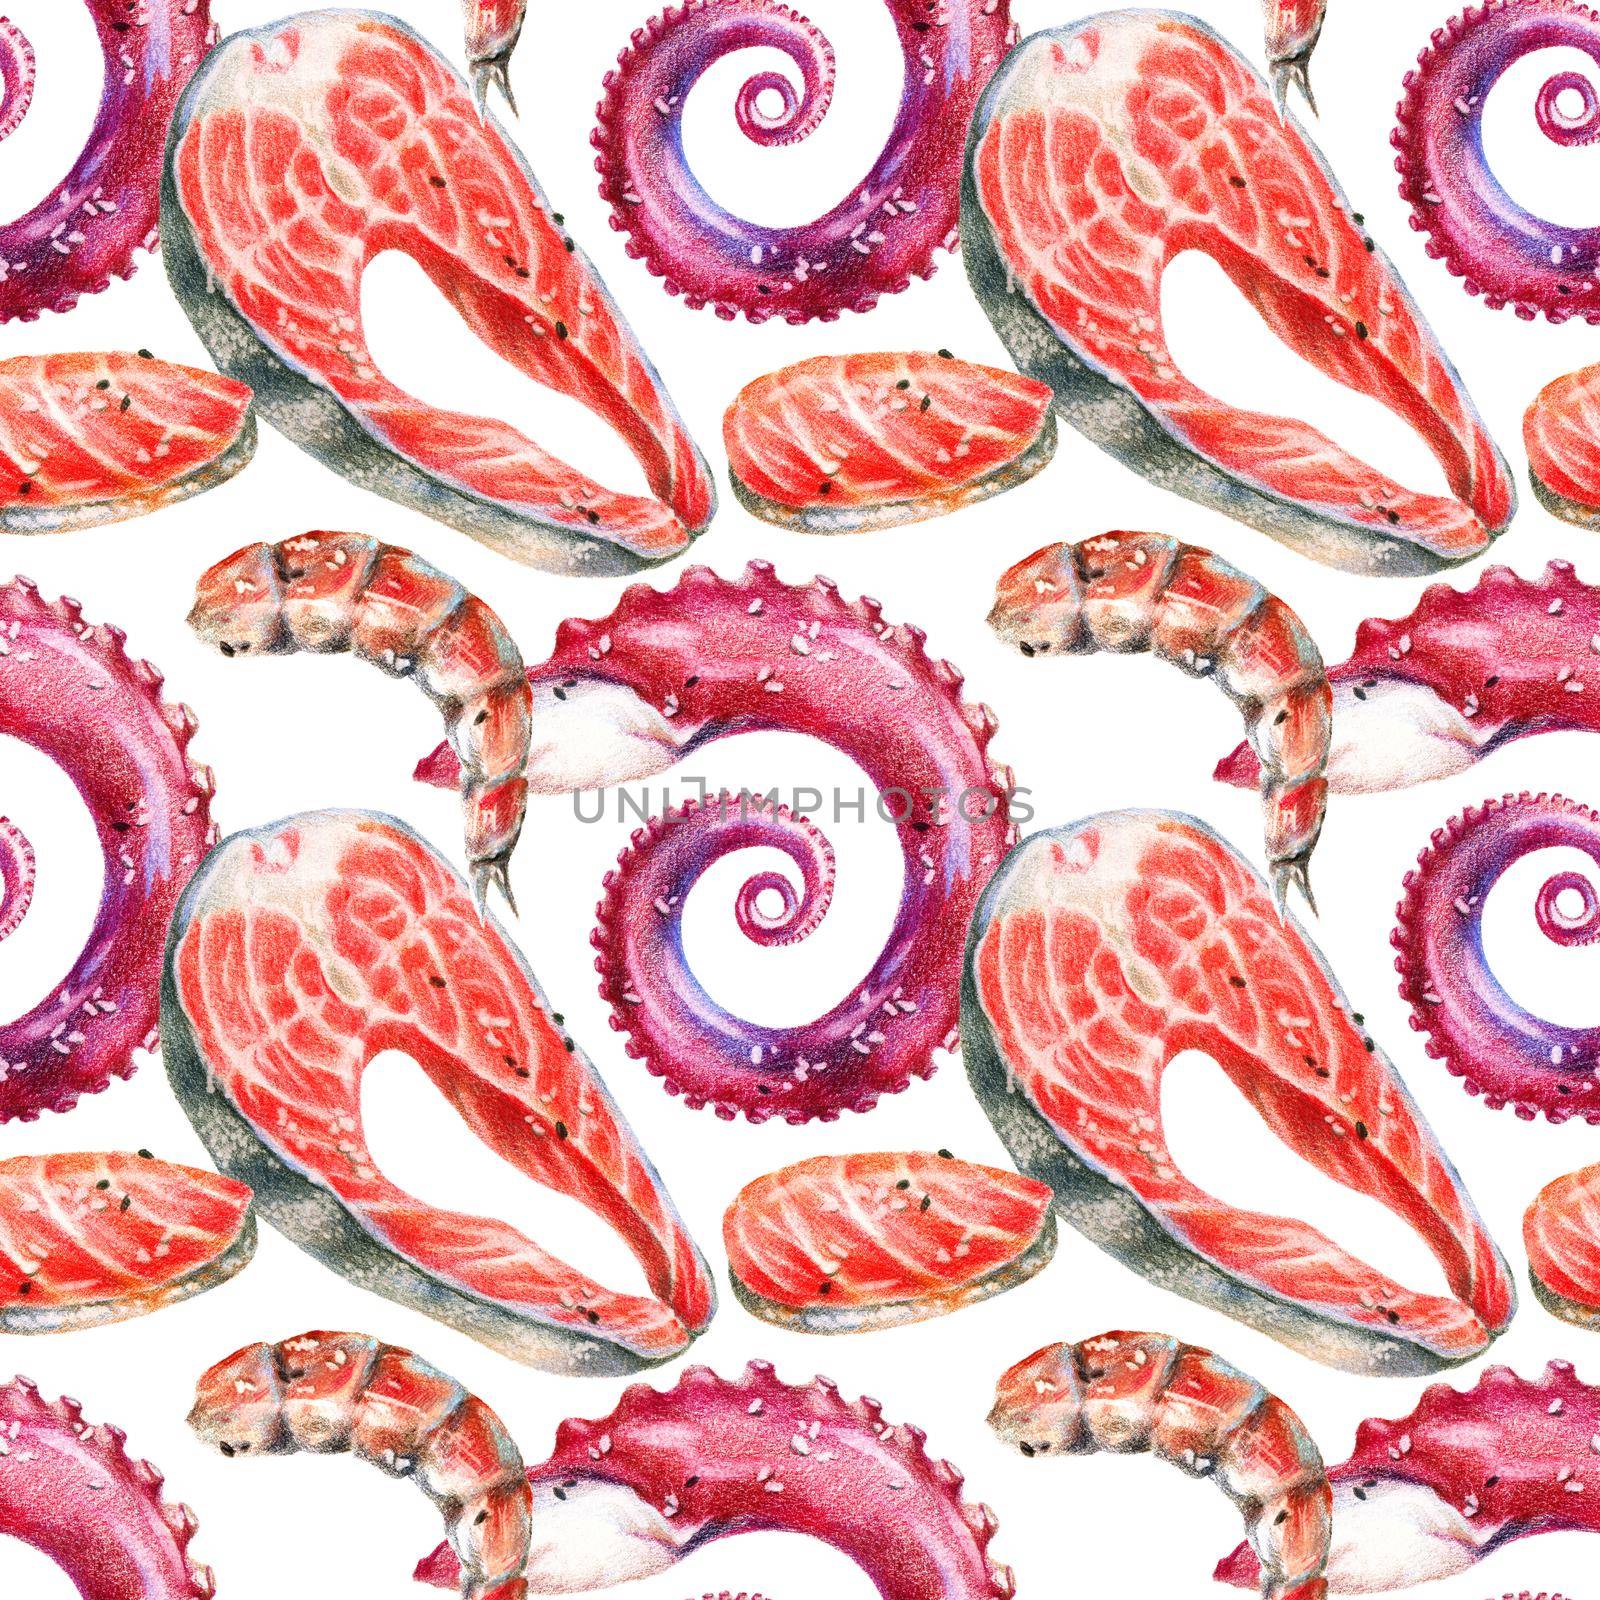 Color pencils illustration of seafood by Olatarakanova